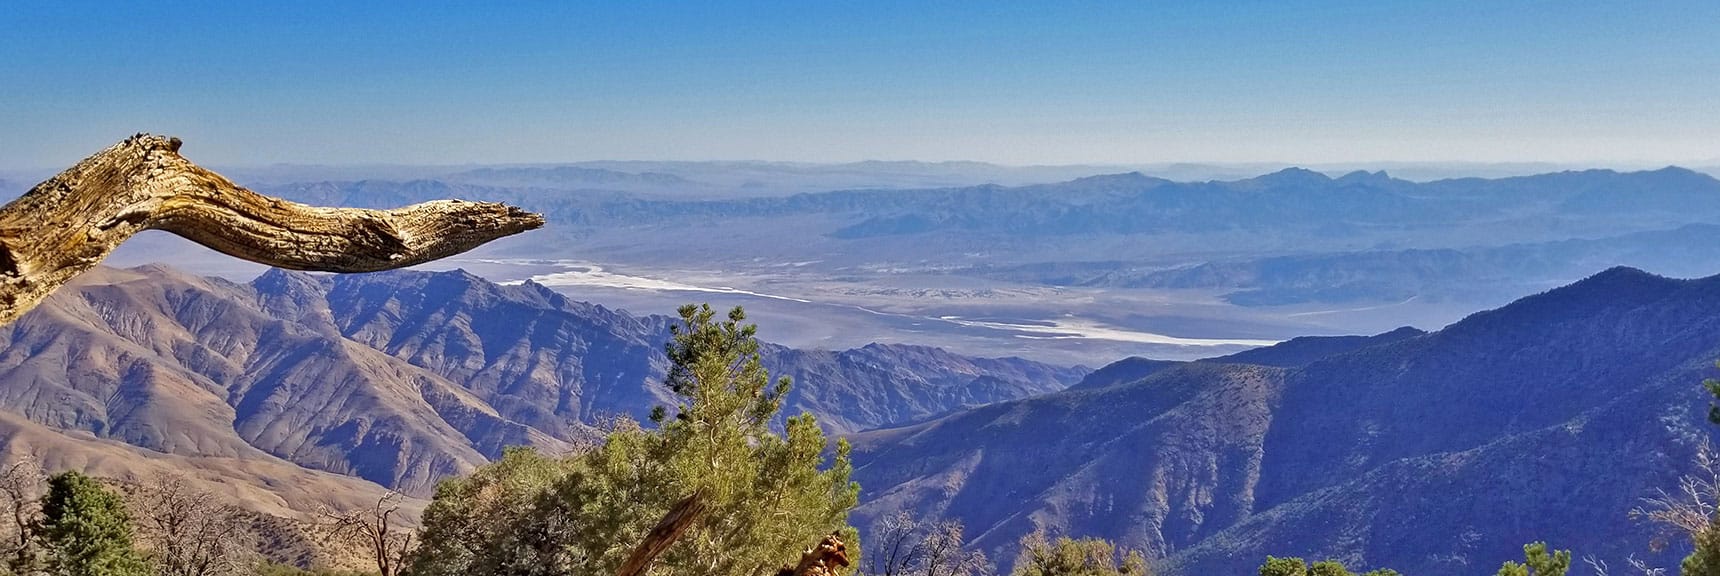 Wildrose Peak | Death Valley National Park, California